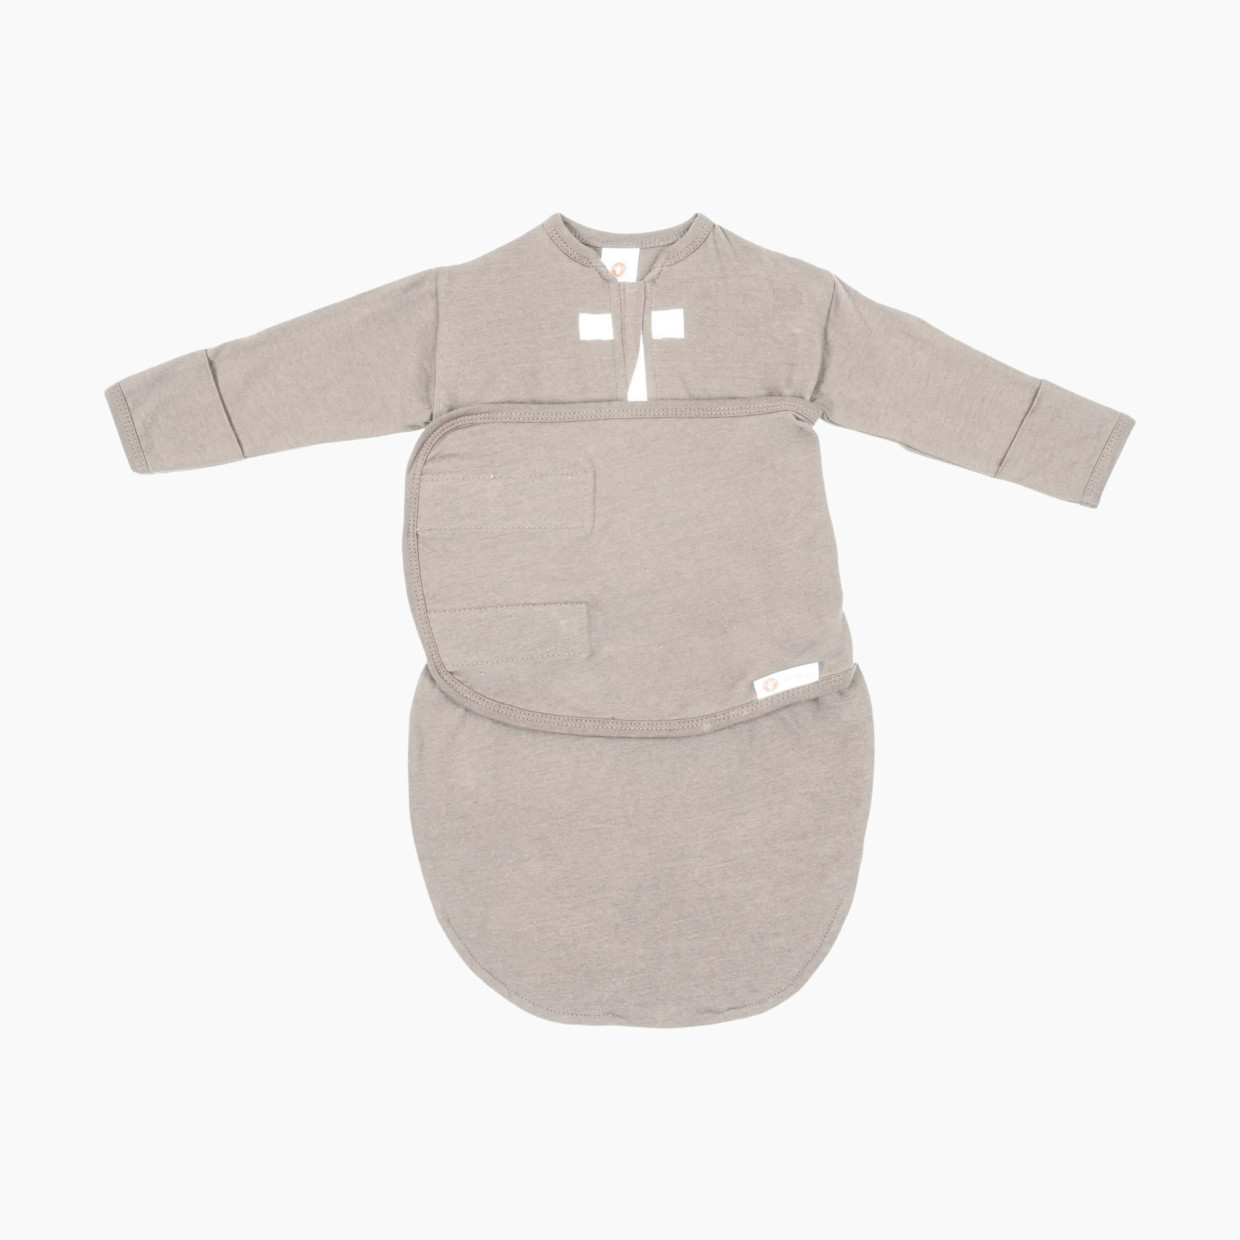 Embe Babies Long Sleeve Swaddle Sack - Chai, Newborn 6-14lbs.